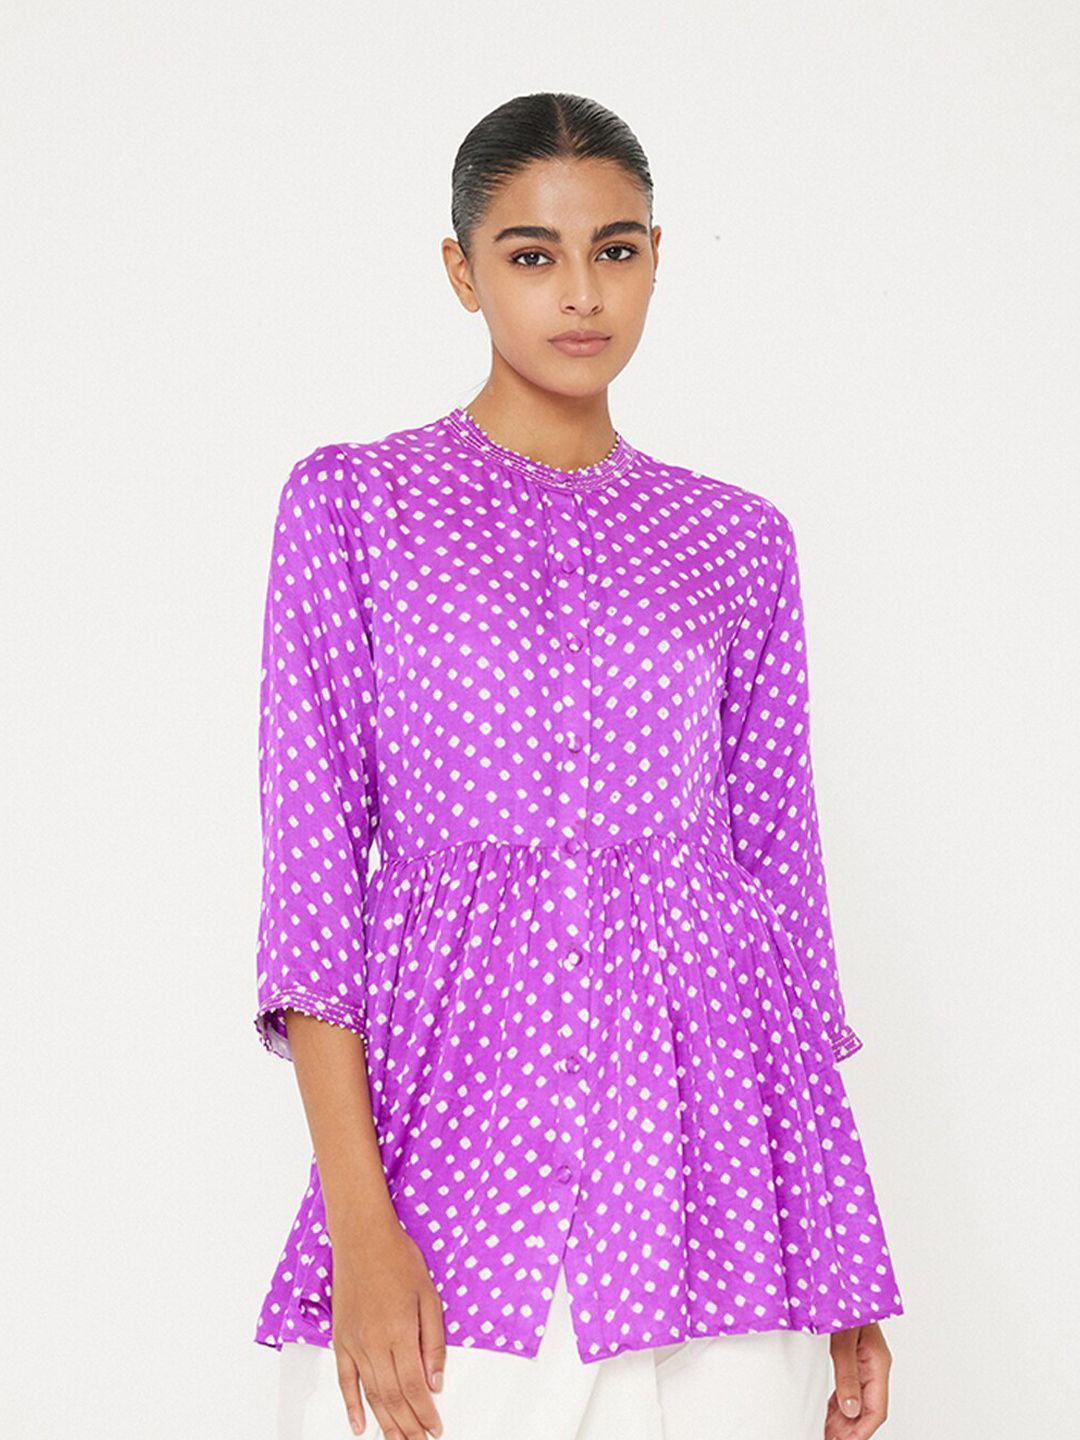 ancestry-purple-polka-dot-print-mandarin-collar-roll-up-sleeves-cinched-waist-top